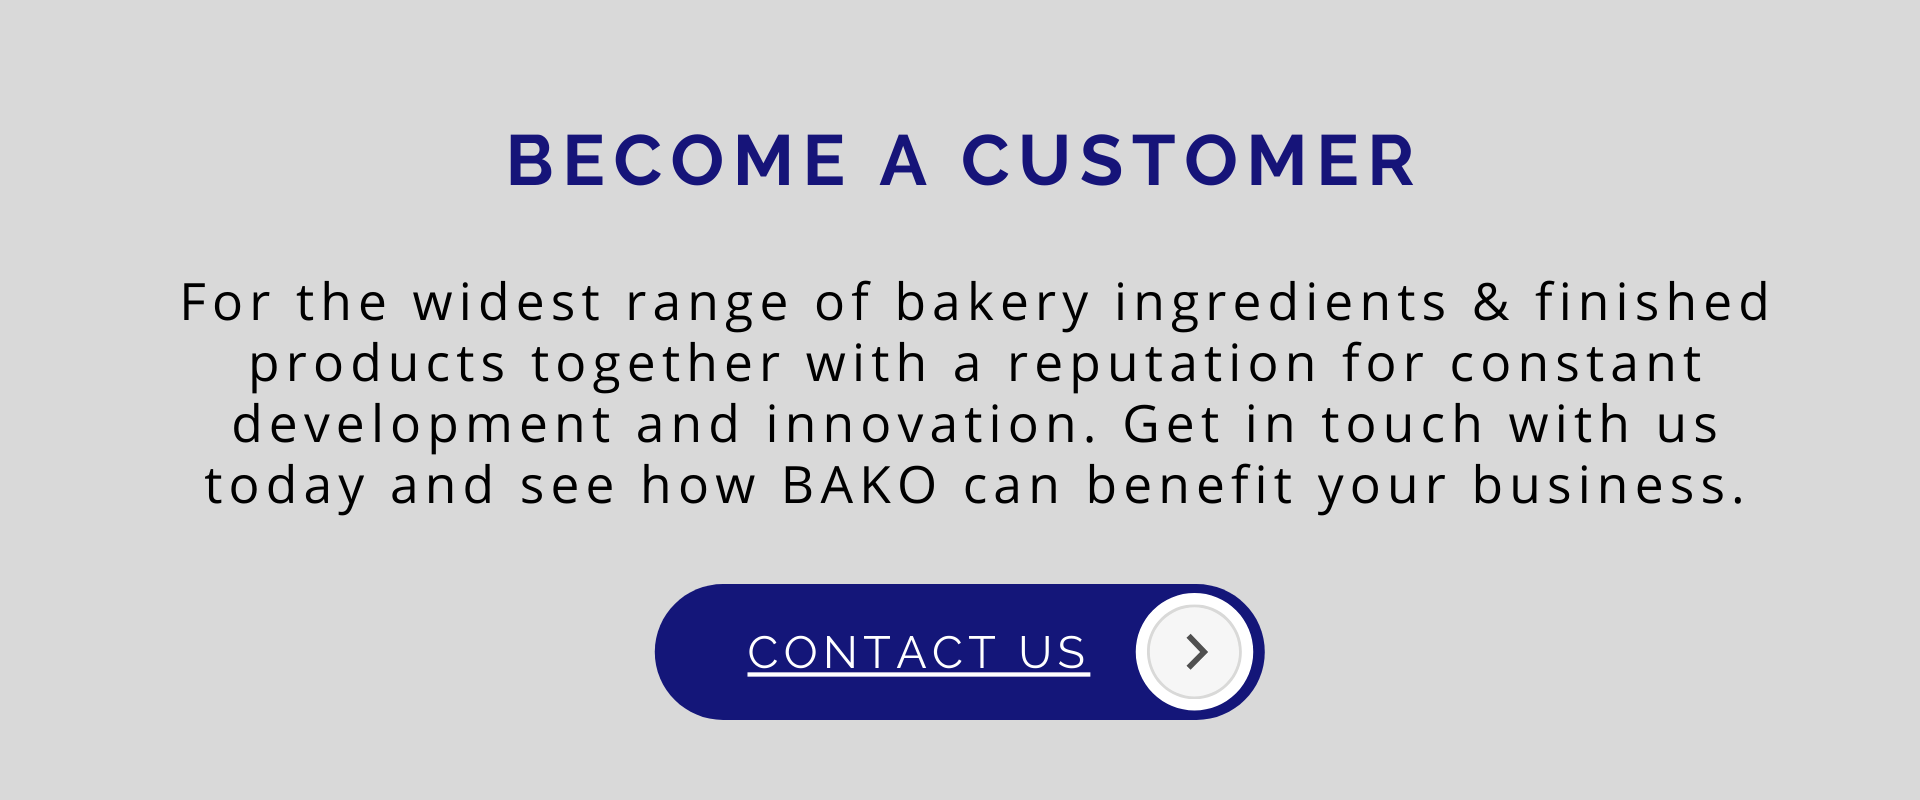 Become a Bako customer